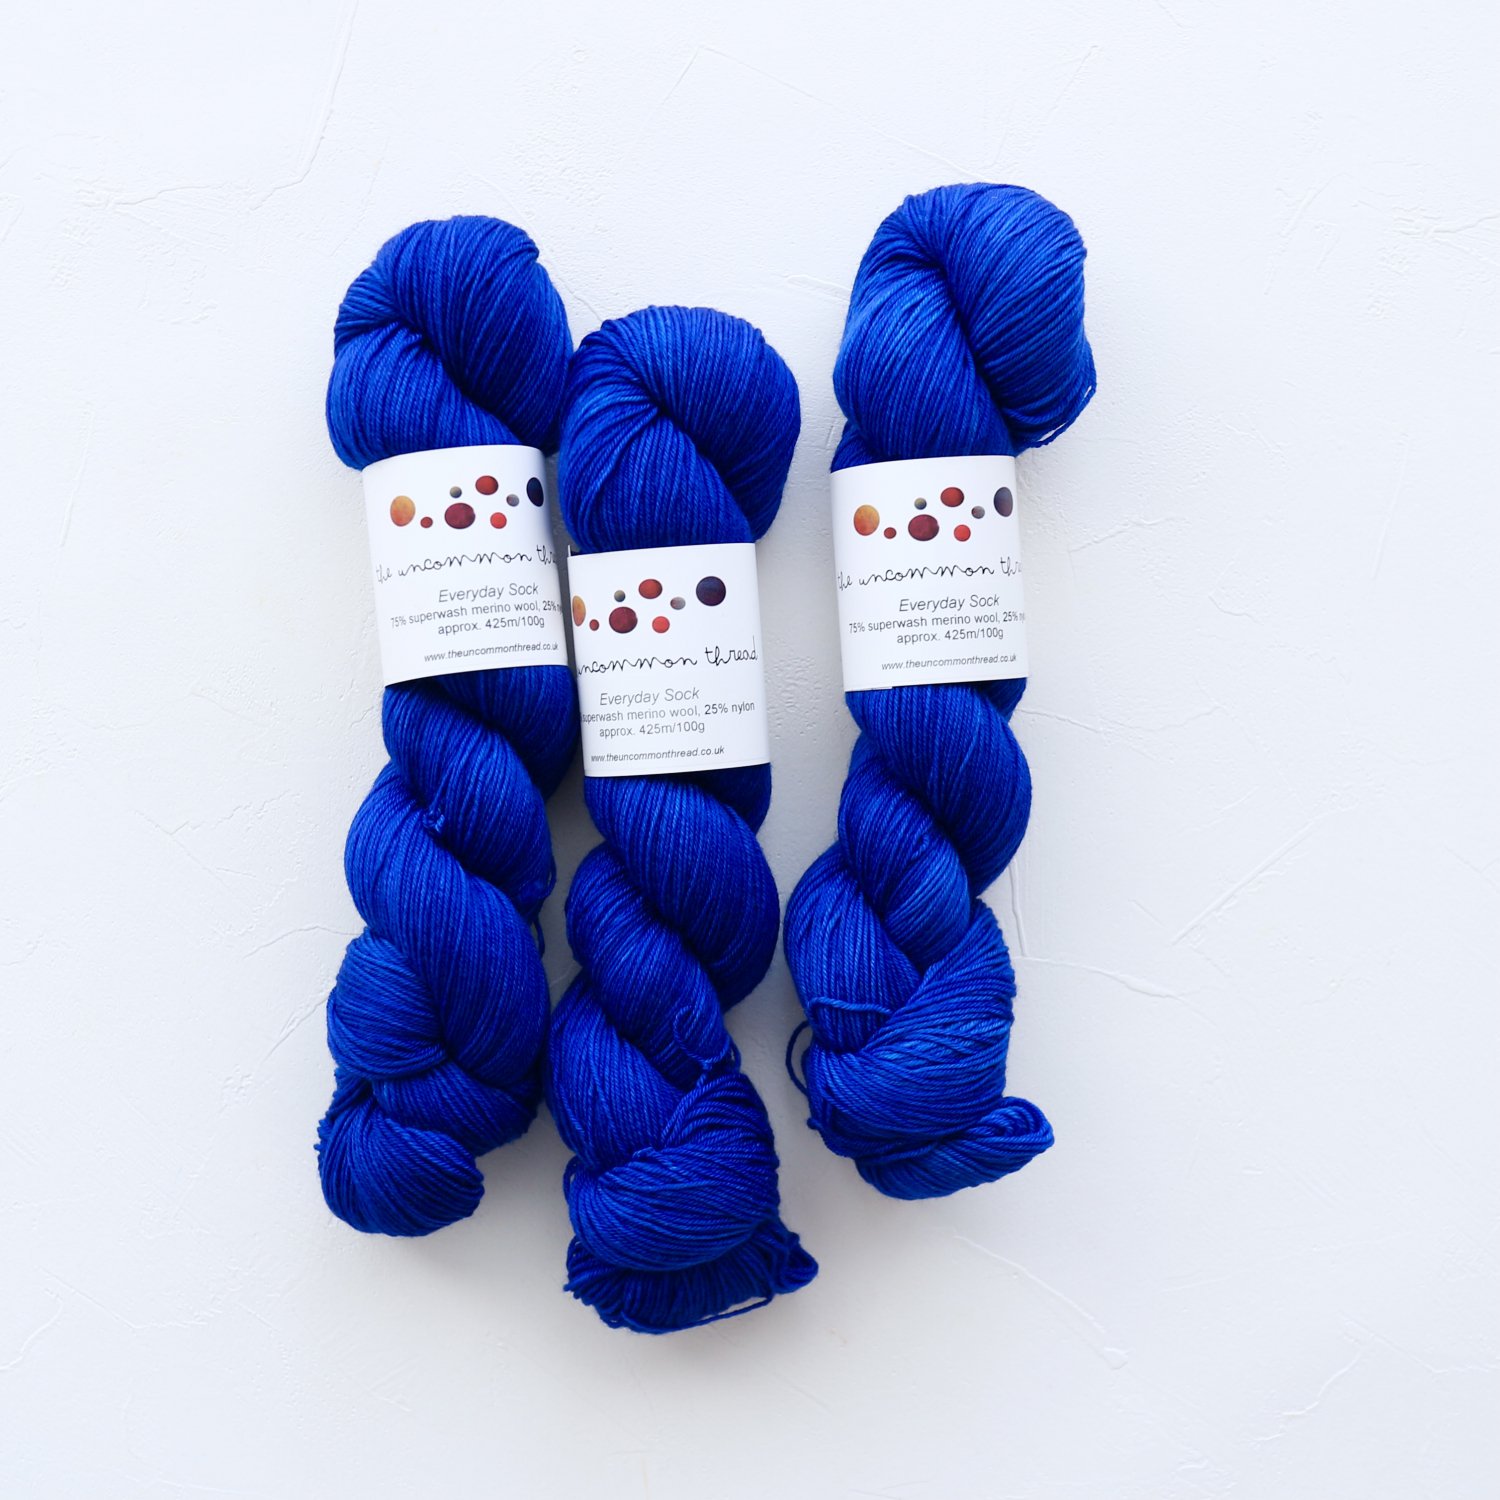 【The Uncommon Thread】<br>Everyday Sock<br>Azurite